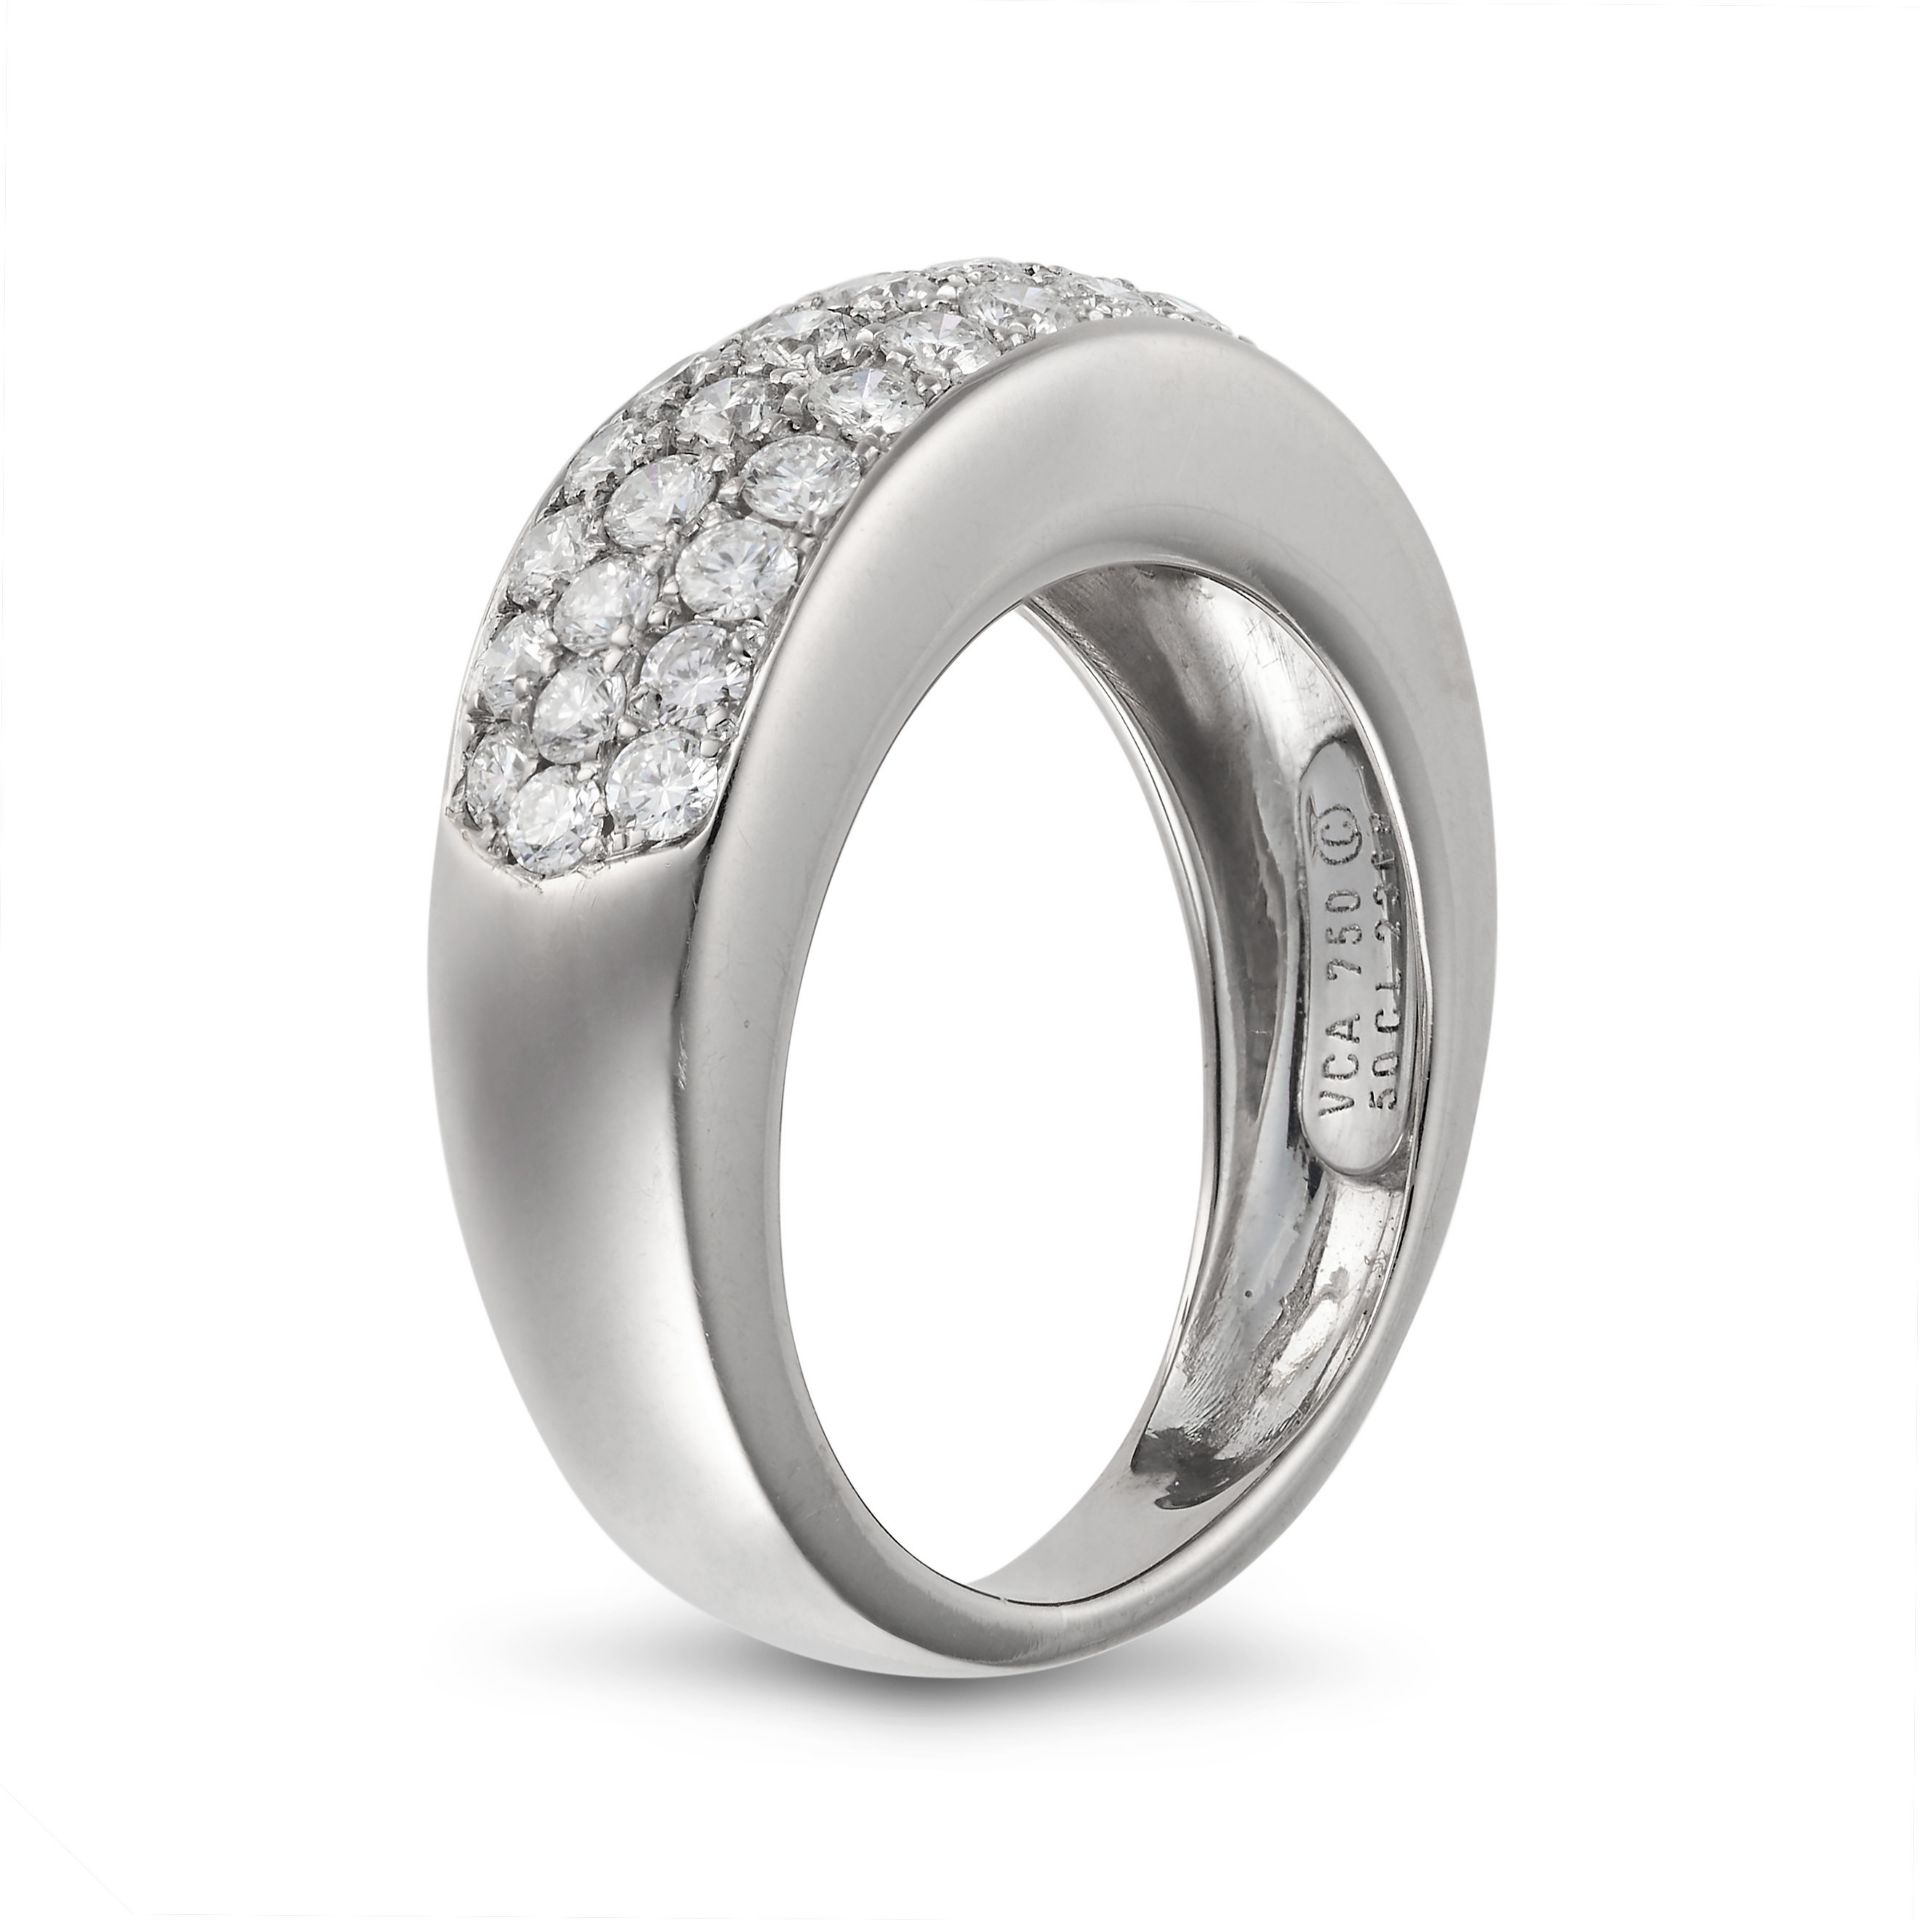 VAN CLEEF & ARPELS, A DIAMOND RING in 18ct white gold, pave set with three rows of round brillian... - Bild 2 aus 2